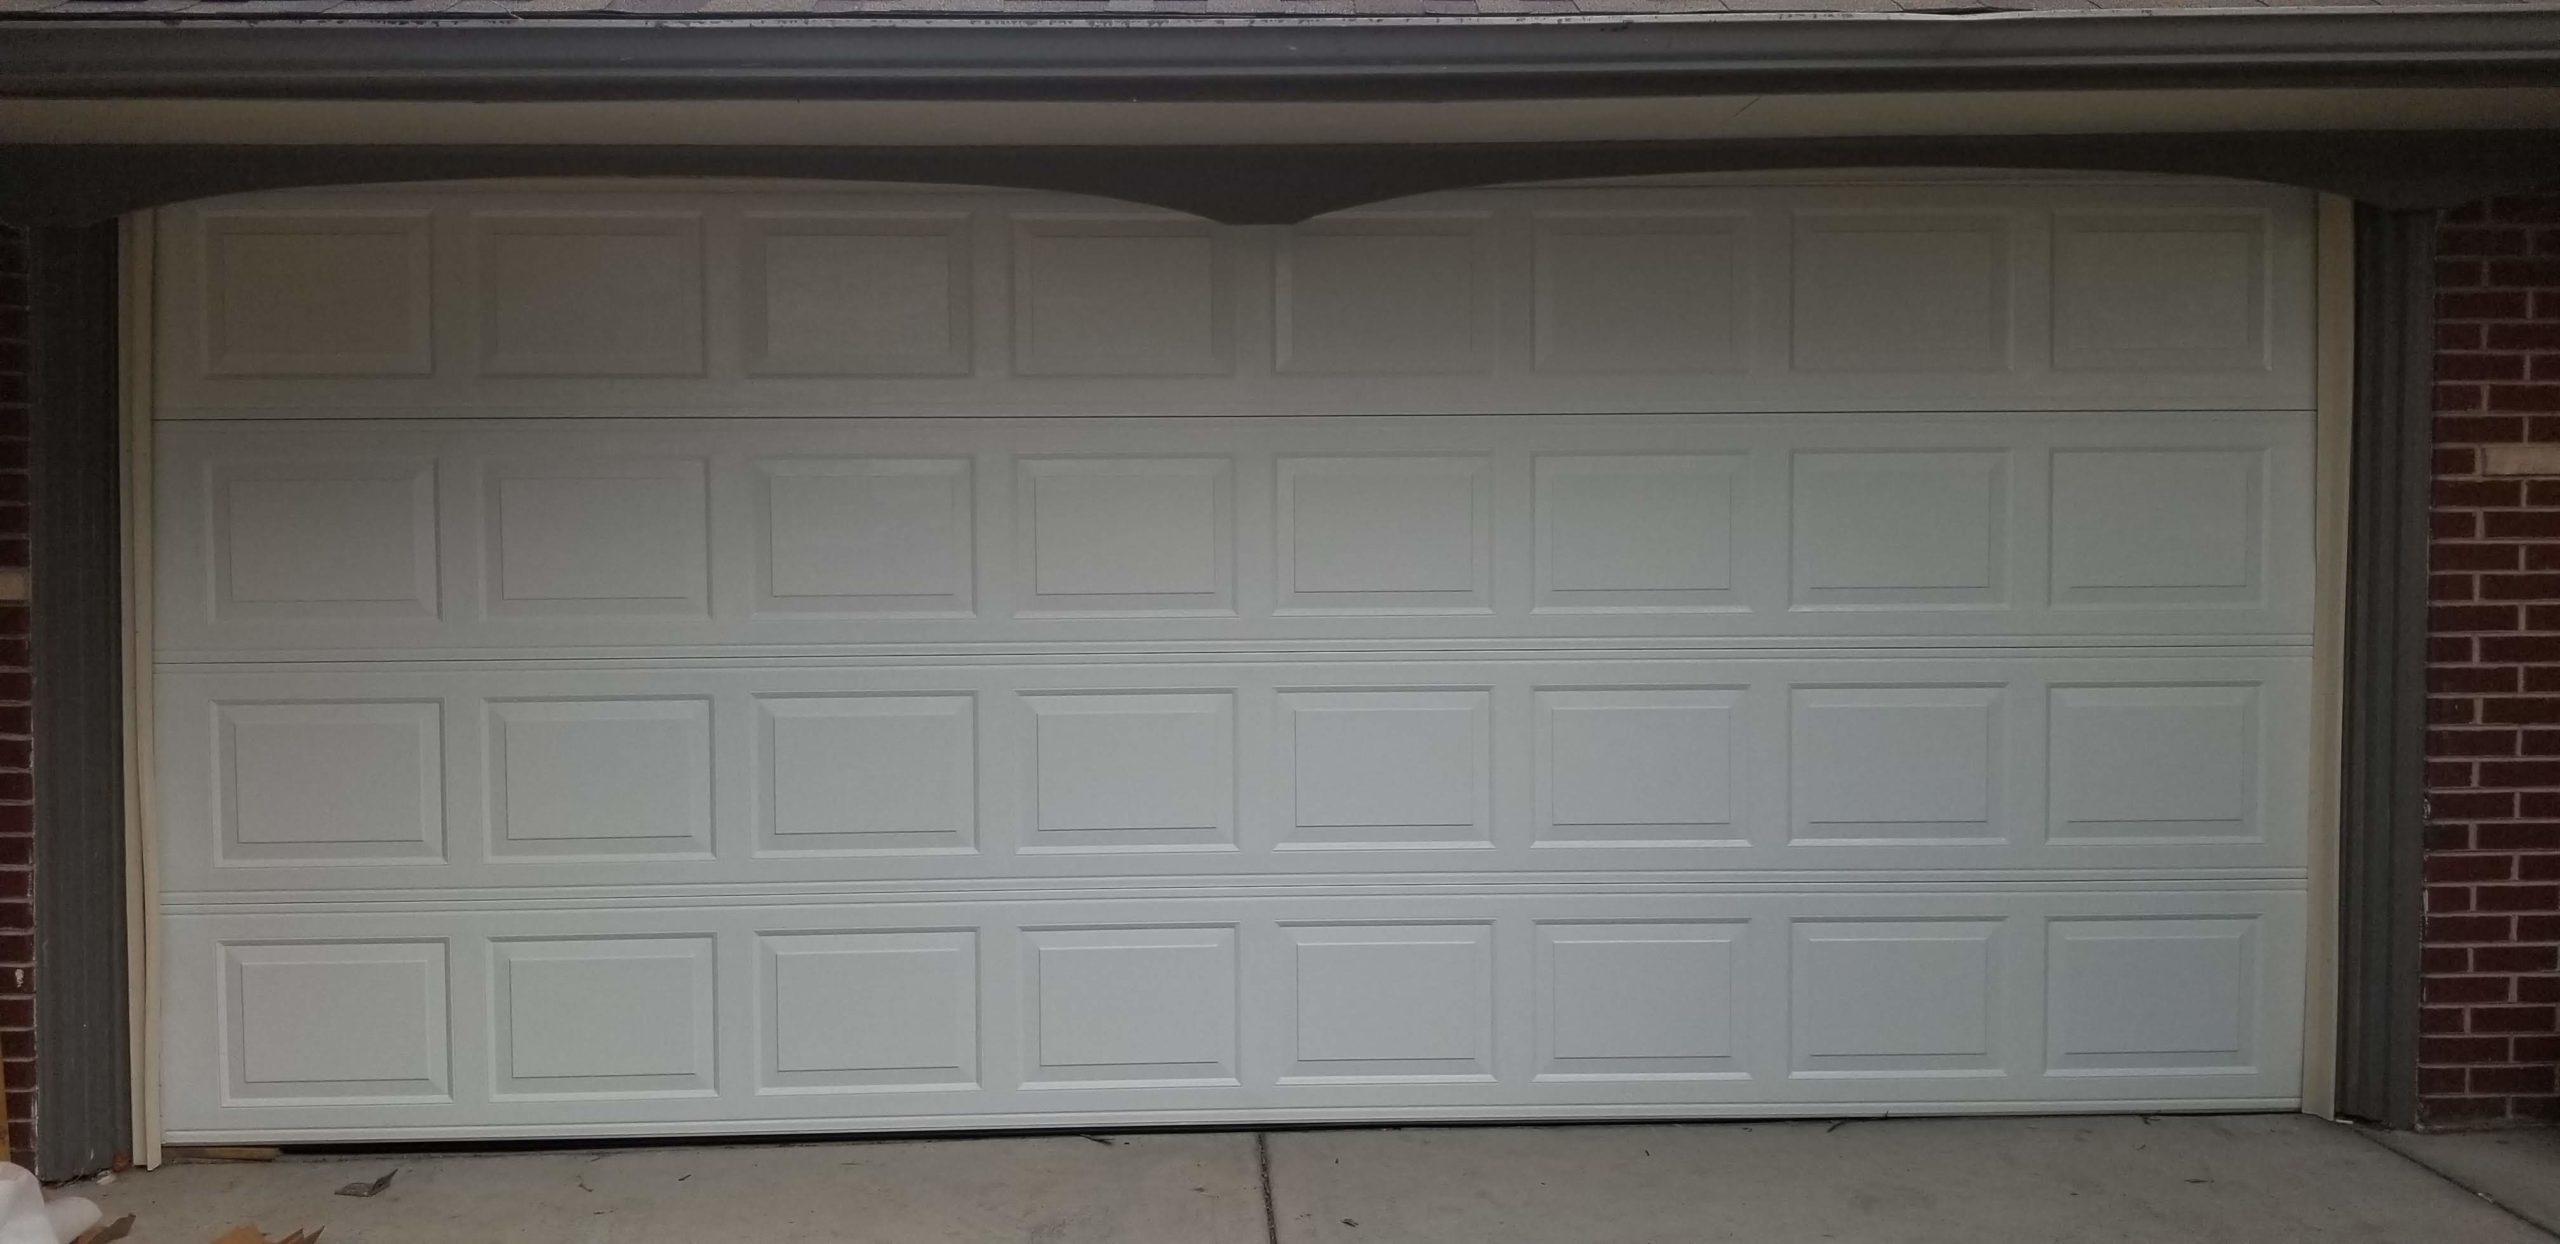 Garage Door Replace Rather than Repaired